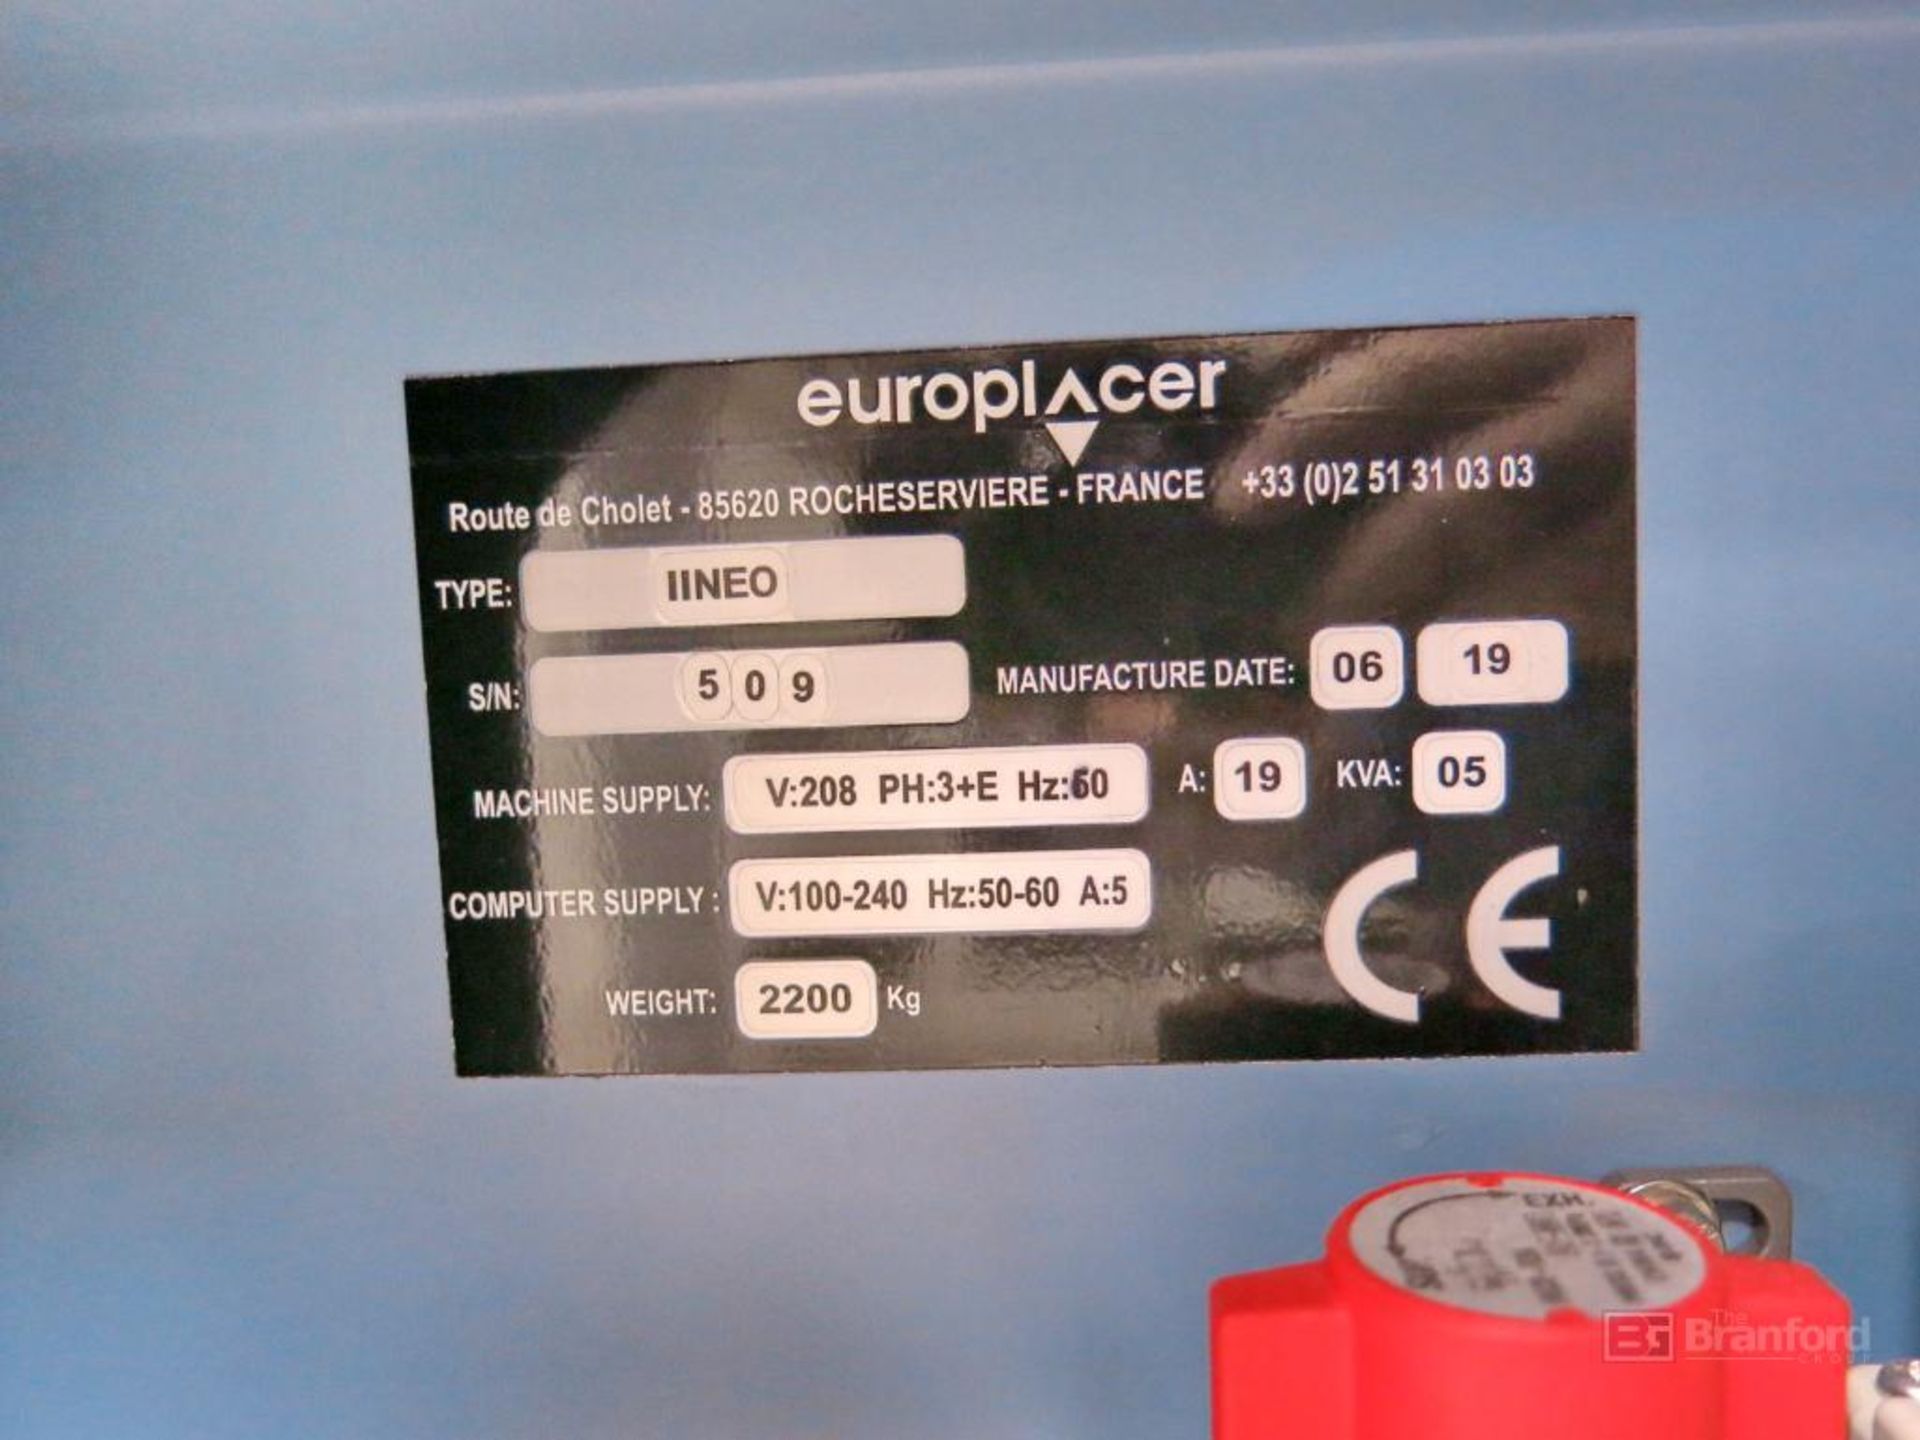 Europlacer Iineo Plus Single Head Surface Mount Machine - Image 17 of 17